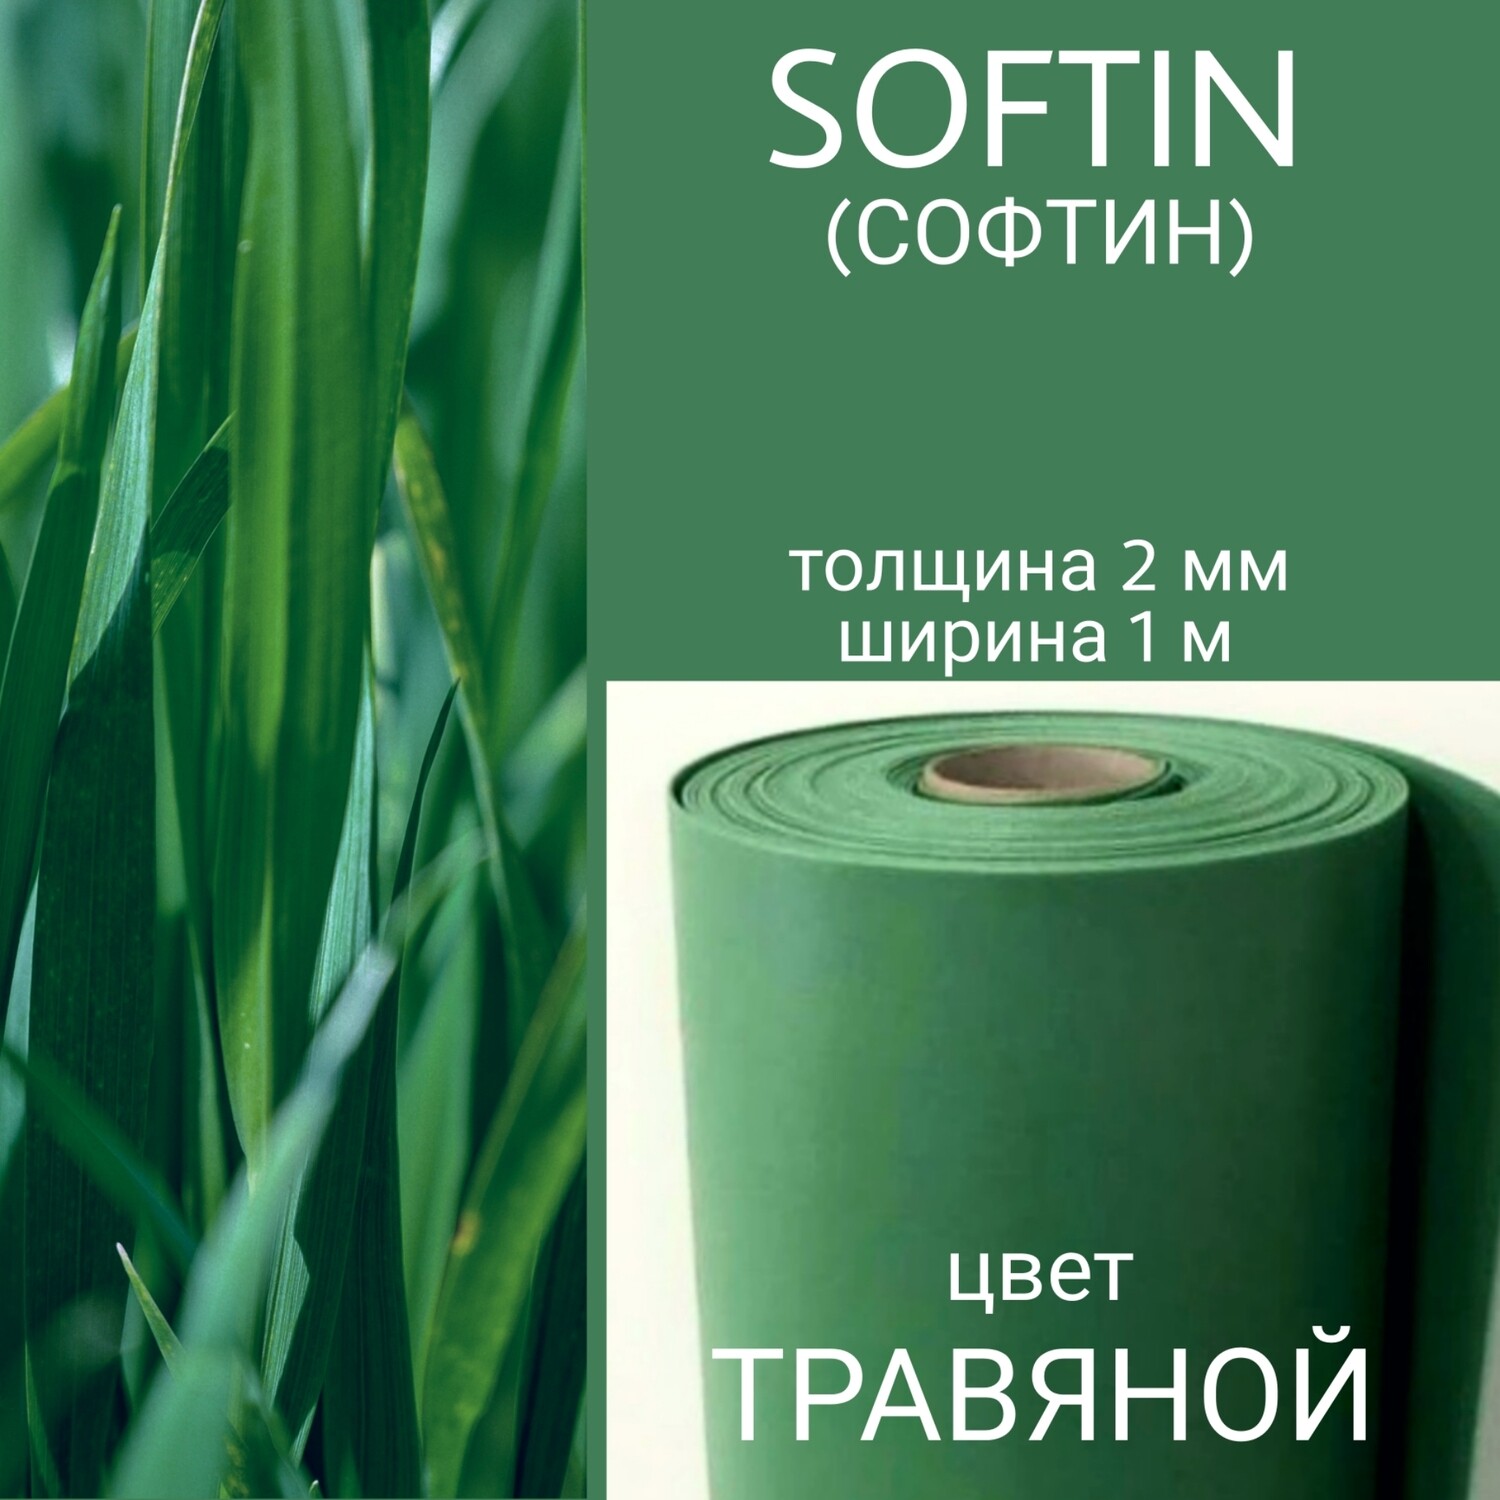 СОФТИН (SOFTIN) - аналог ИЗОЛОНА ППЭ, цвет - ТРАВЯНОЙ, толщина 2 мм, ширина 1 метр, (цена за 1 метр)